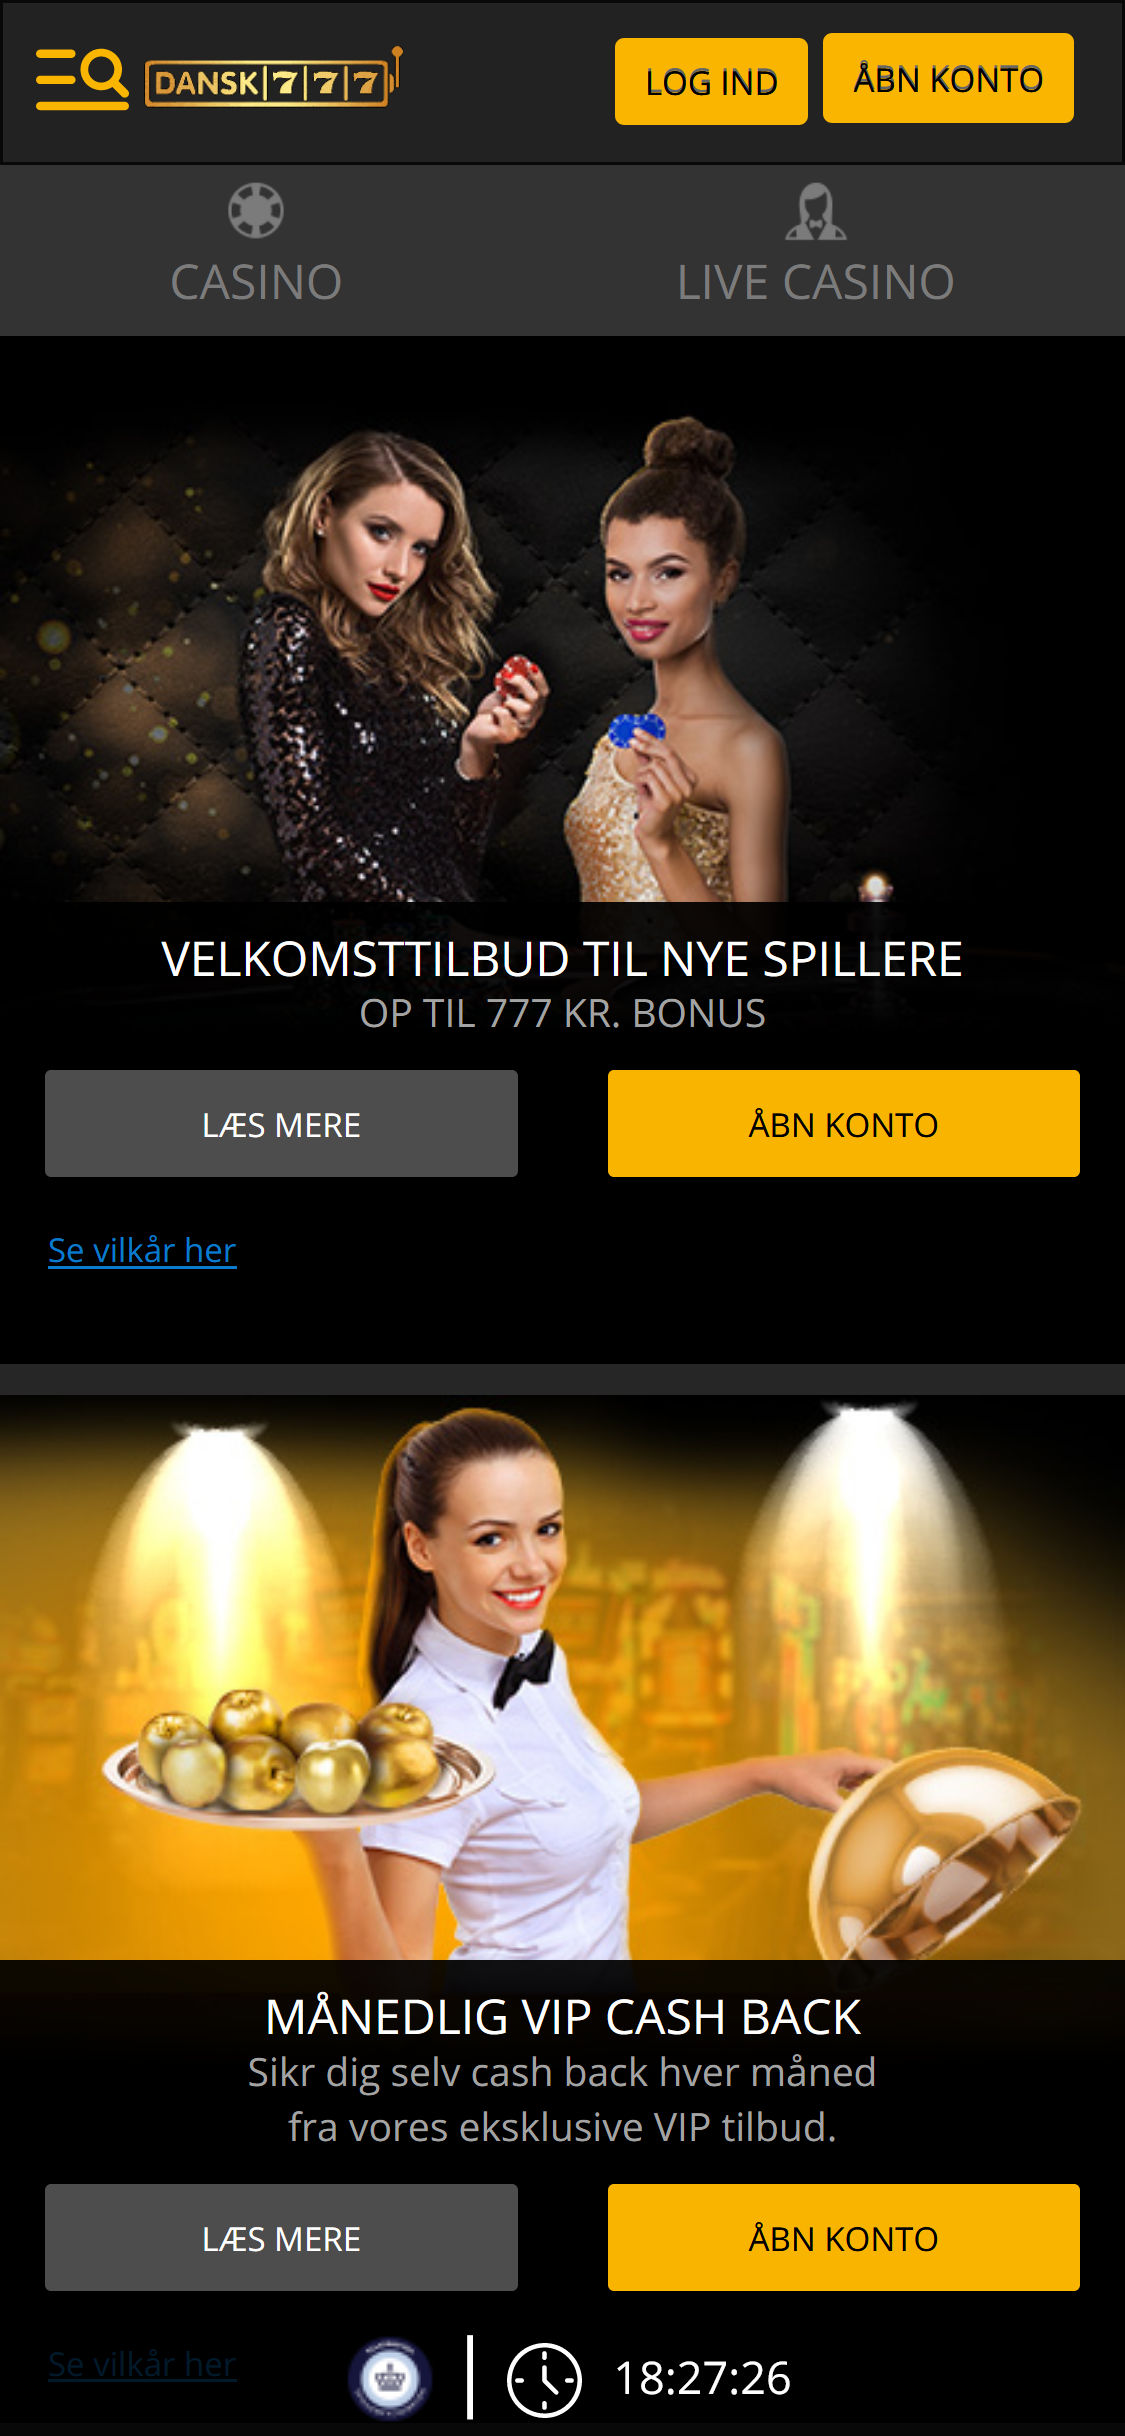 Dansk777 Casino Mobile No Deposit Bonus Review